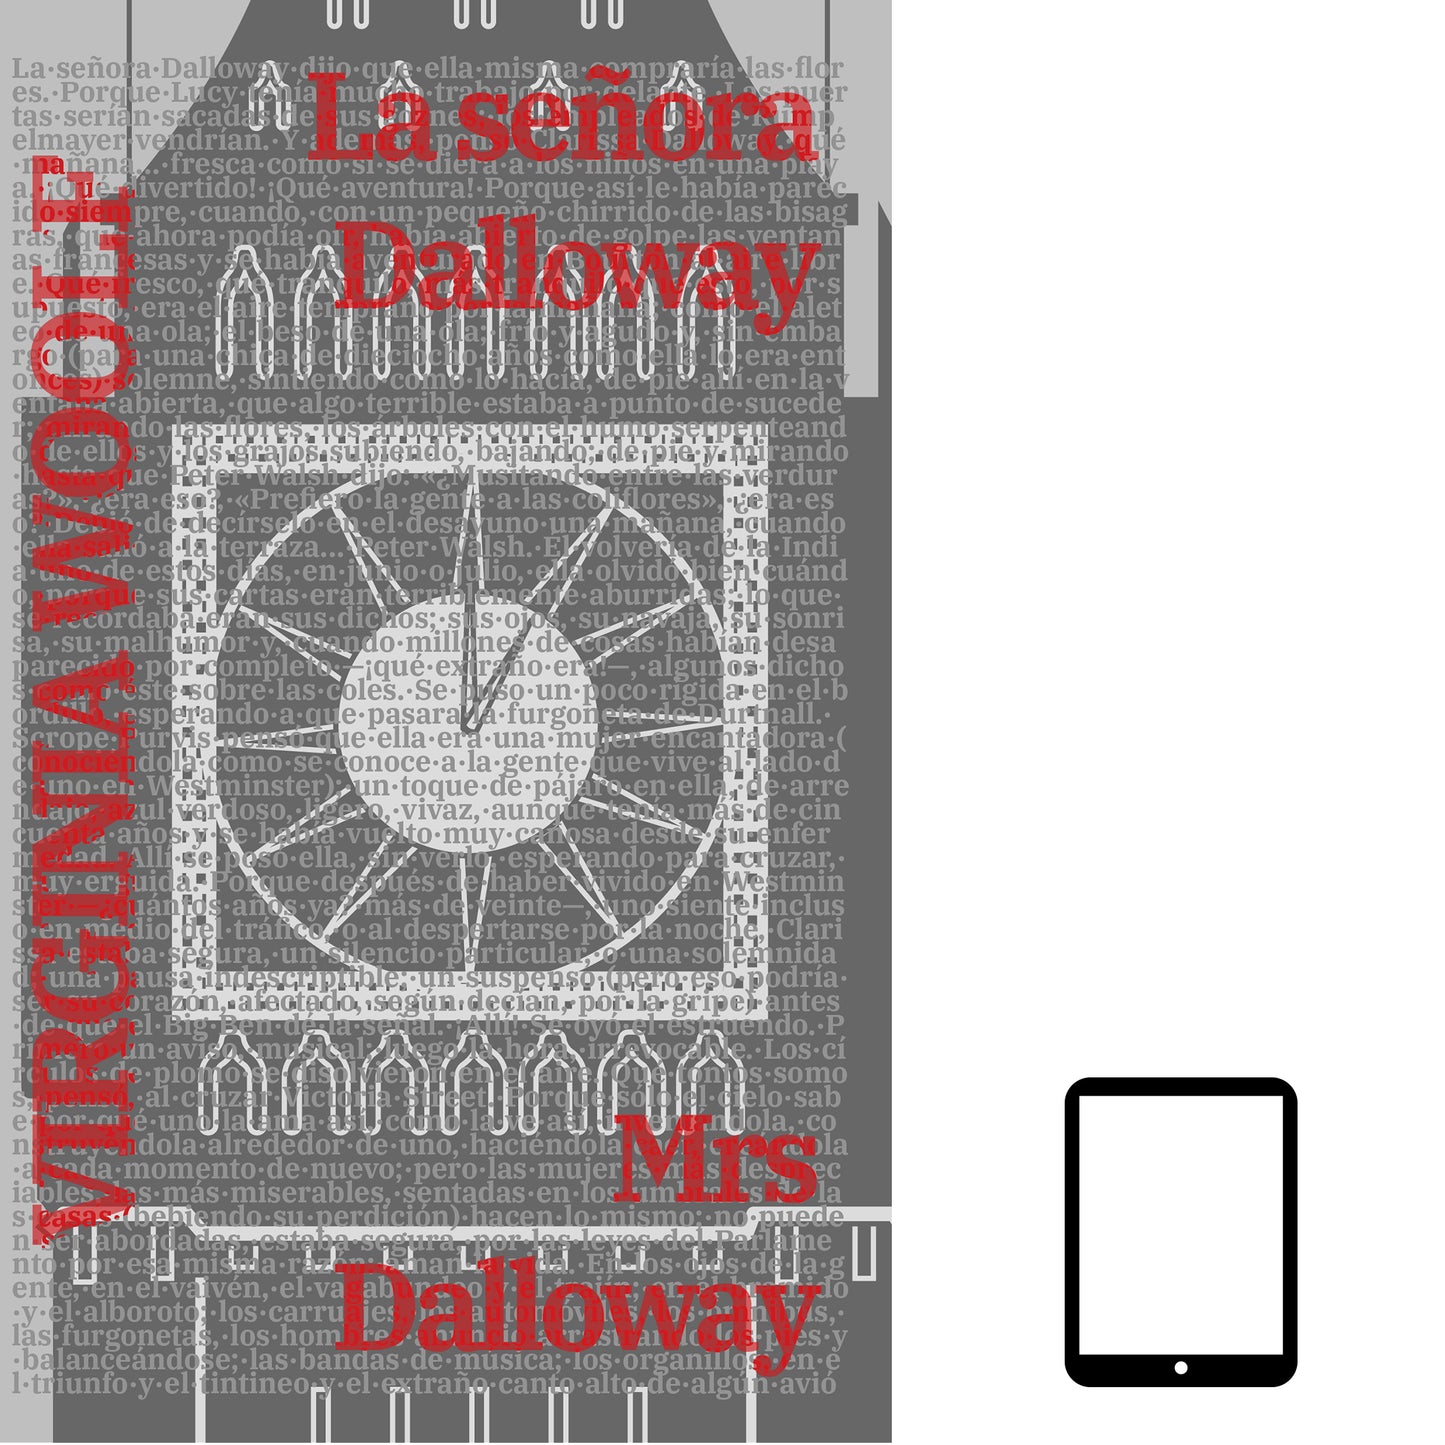 La señora Dalloway - Mrs Dalloway | ebook bilingüe - Español / Inglés